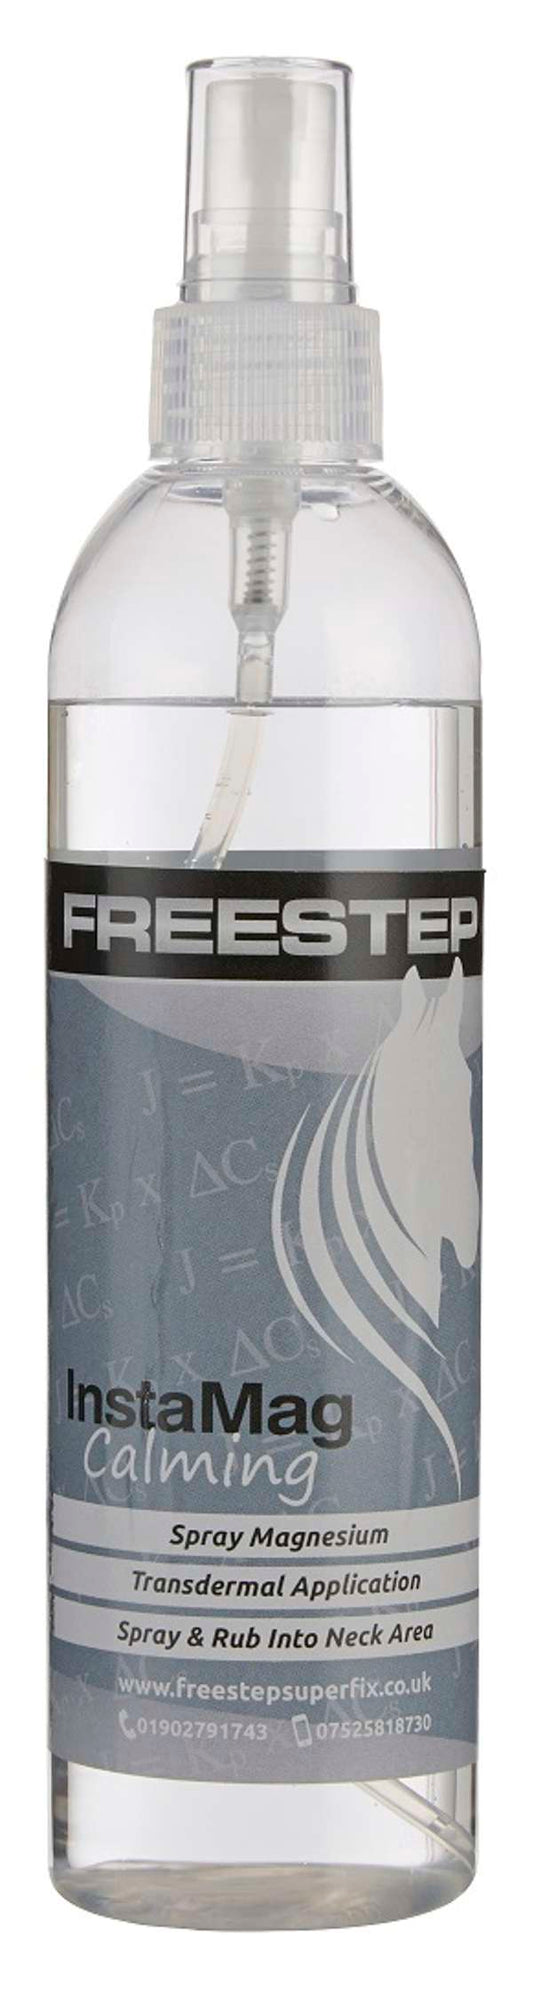 Freestep InstaMag Calming Spray